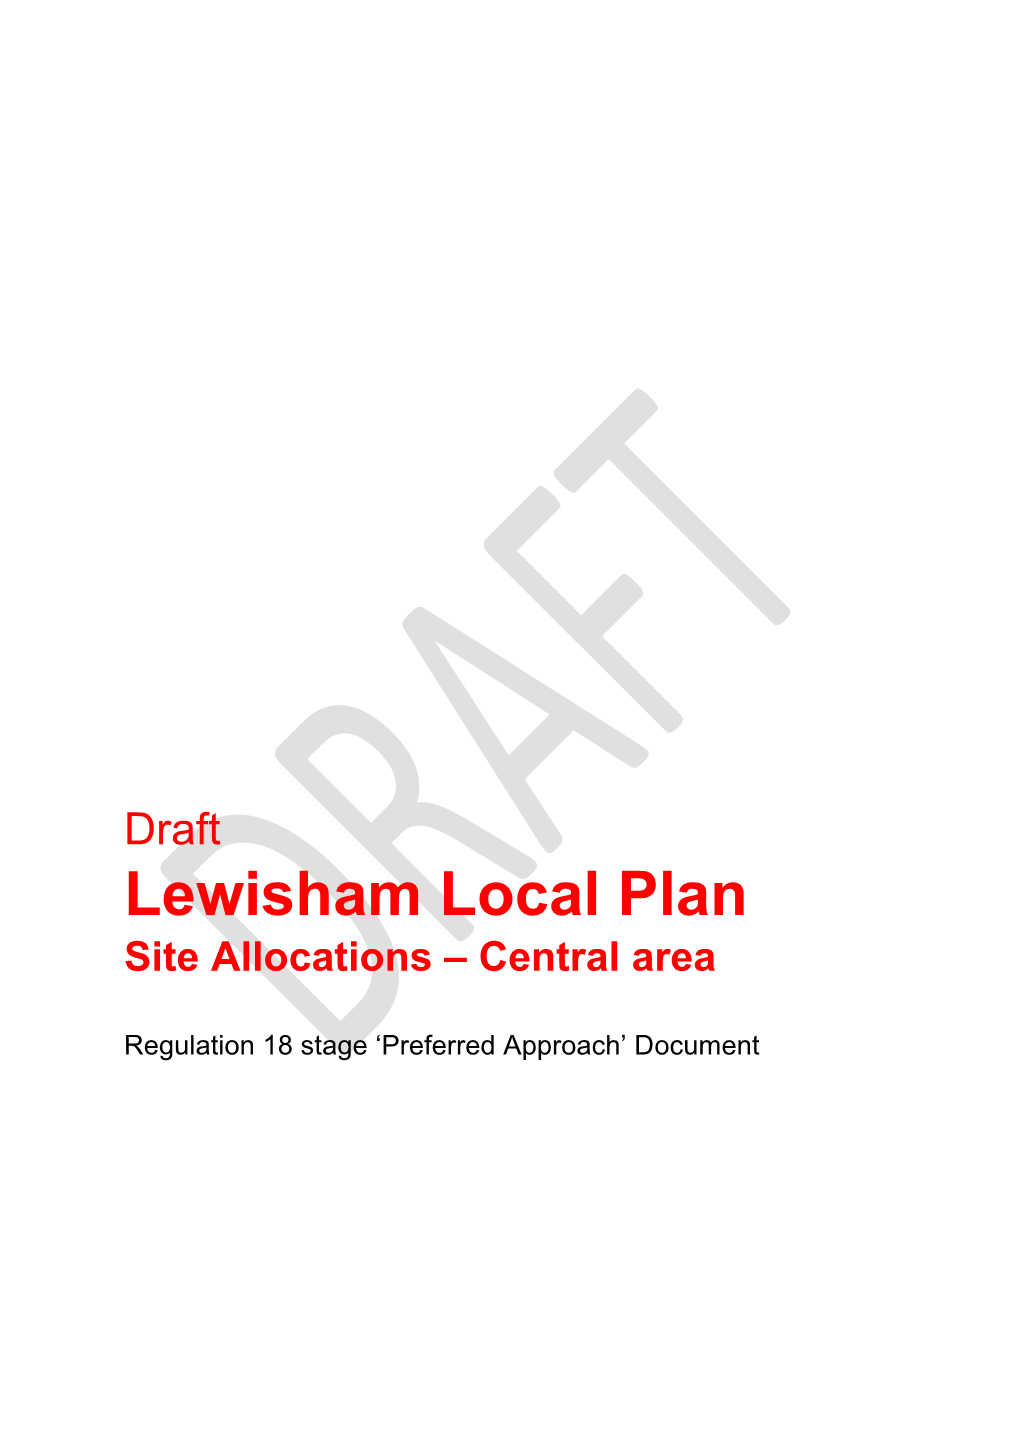 Lewisham Local Plan Site Allocations – Central Area